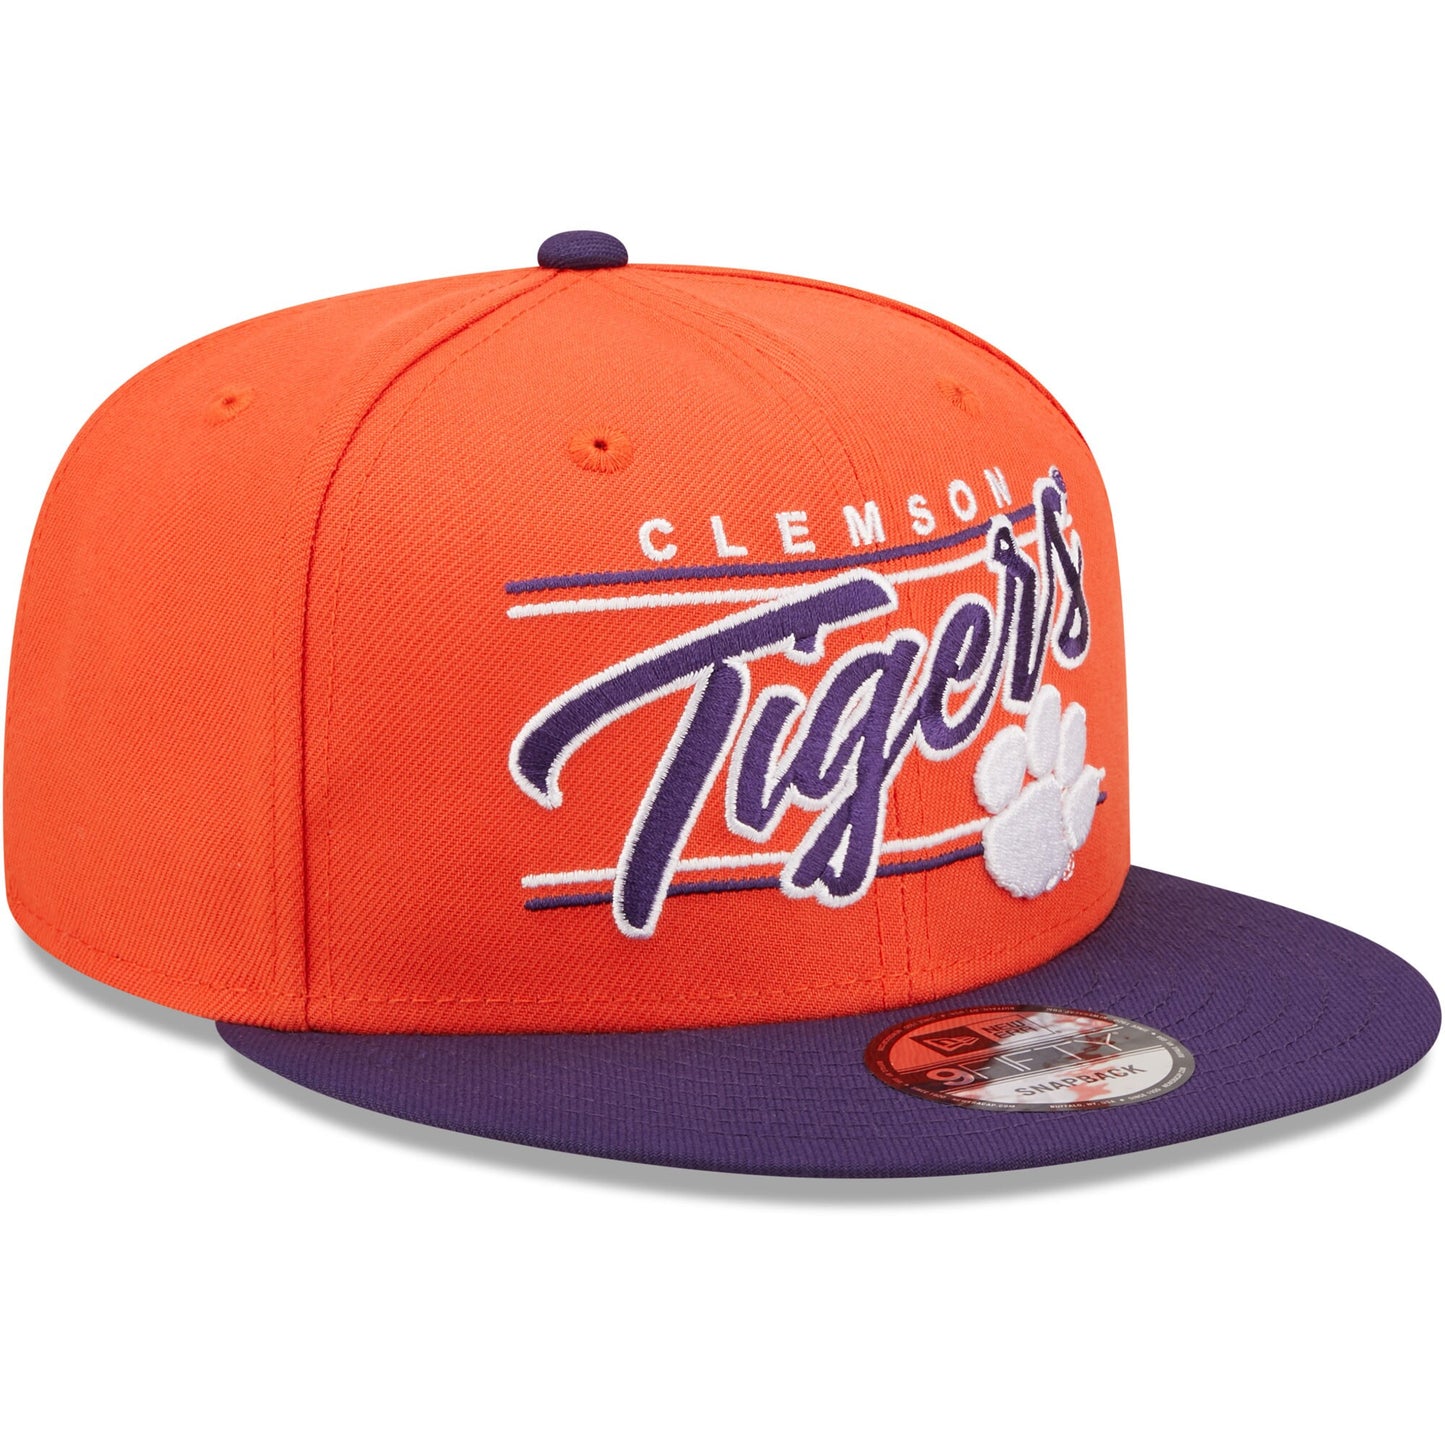 Clemson Tigers New Era Team Script 9FIFTY Snapback Hat - Orange